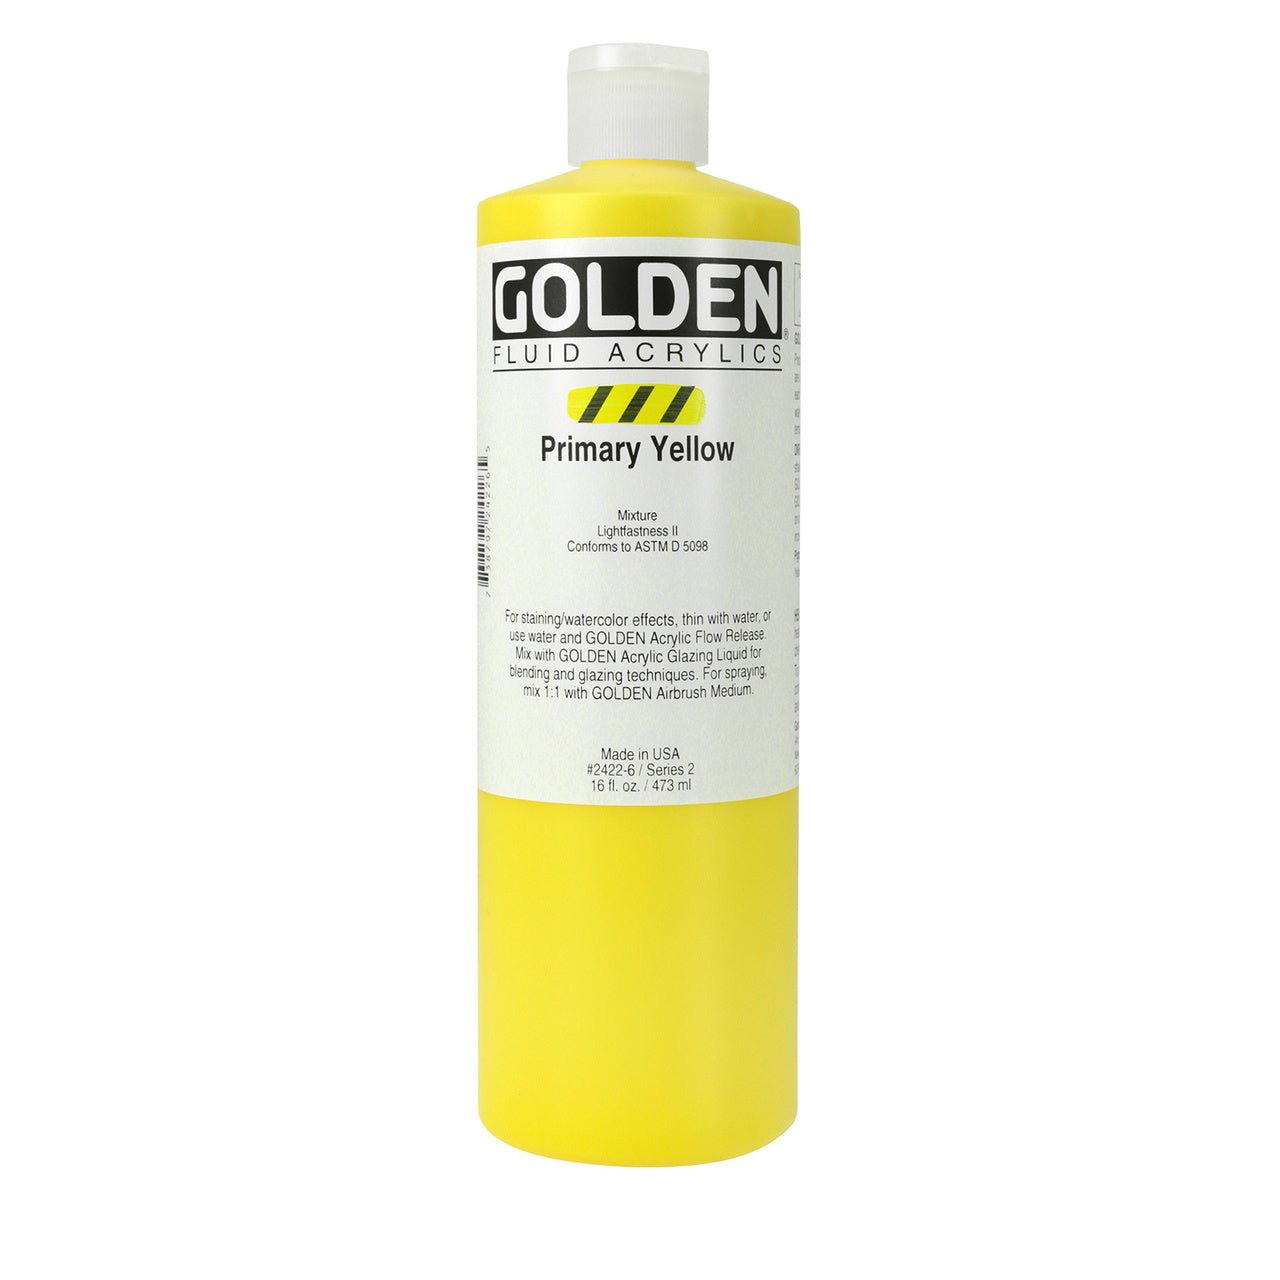 Golden Fluid Acrylic Primary Yellow 16 oz - merriartist.com